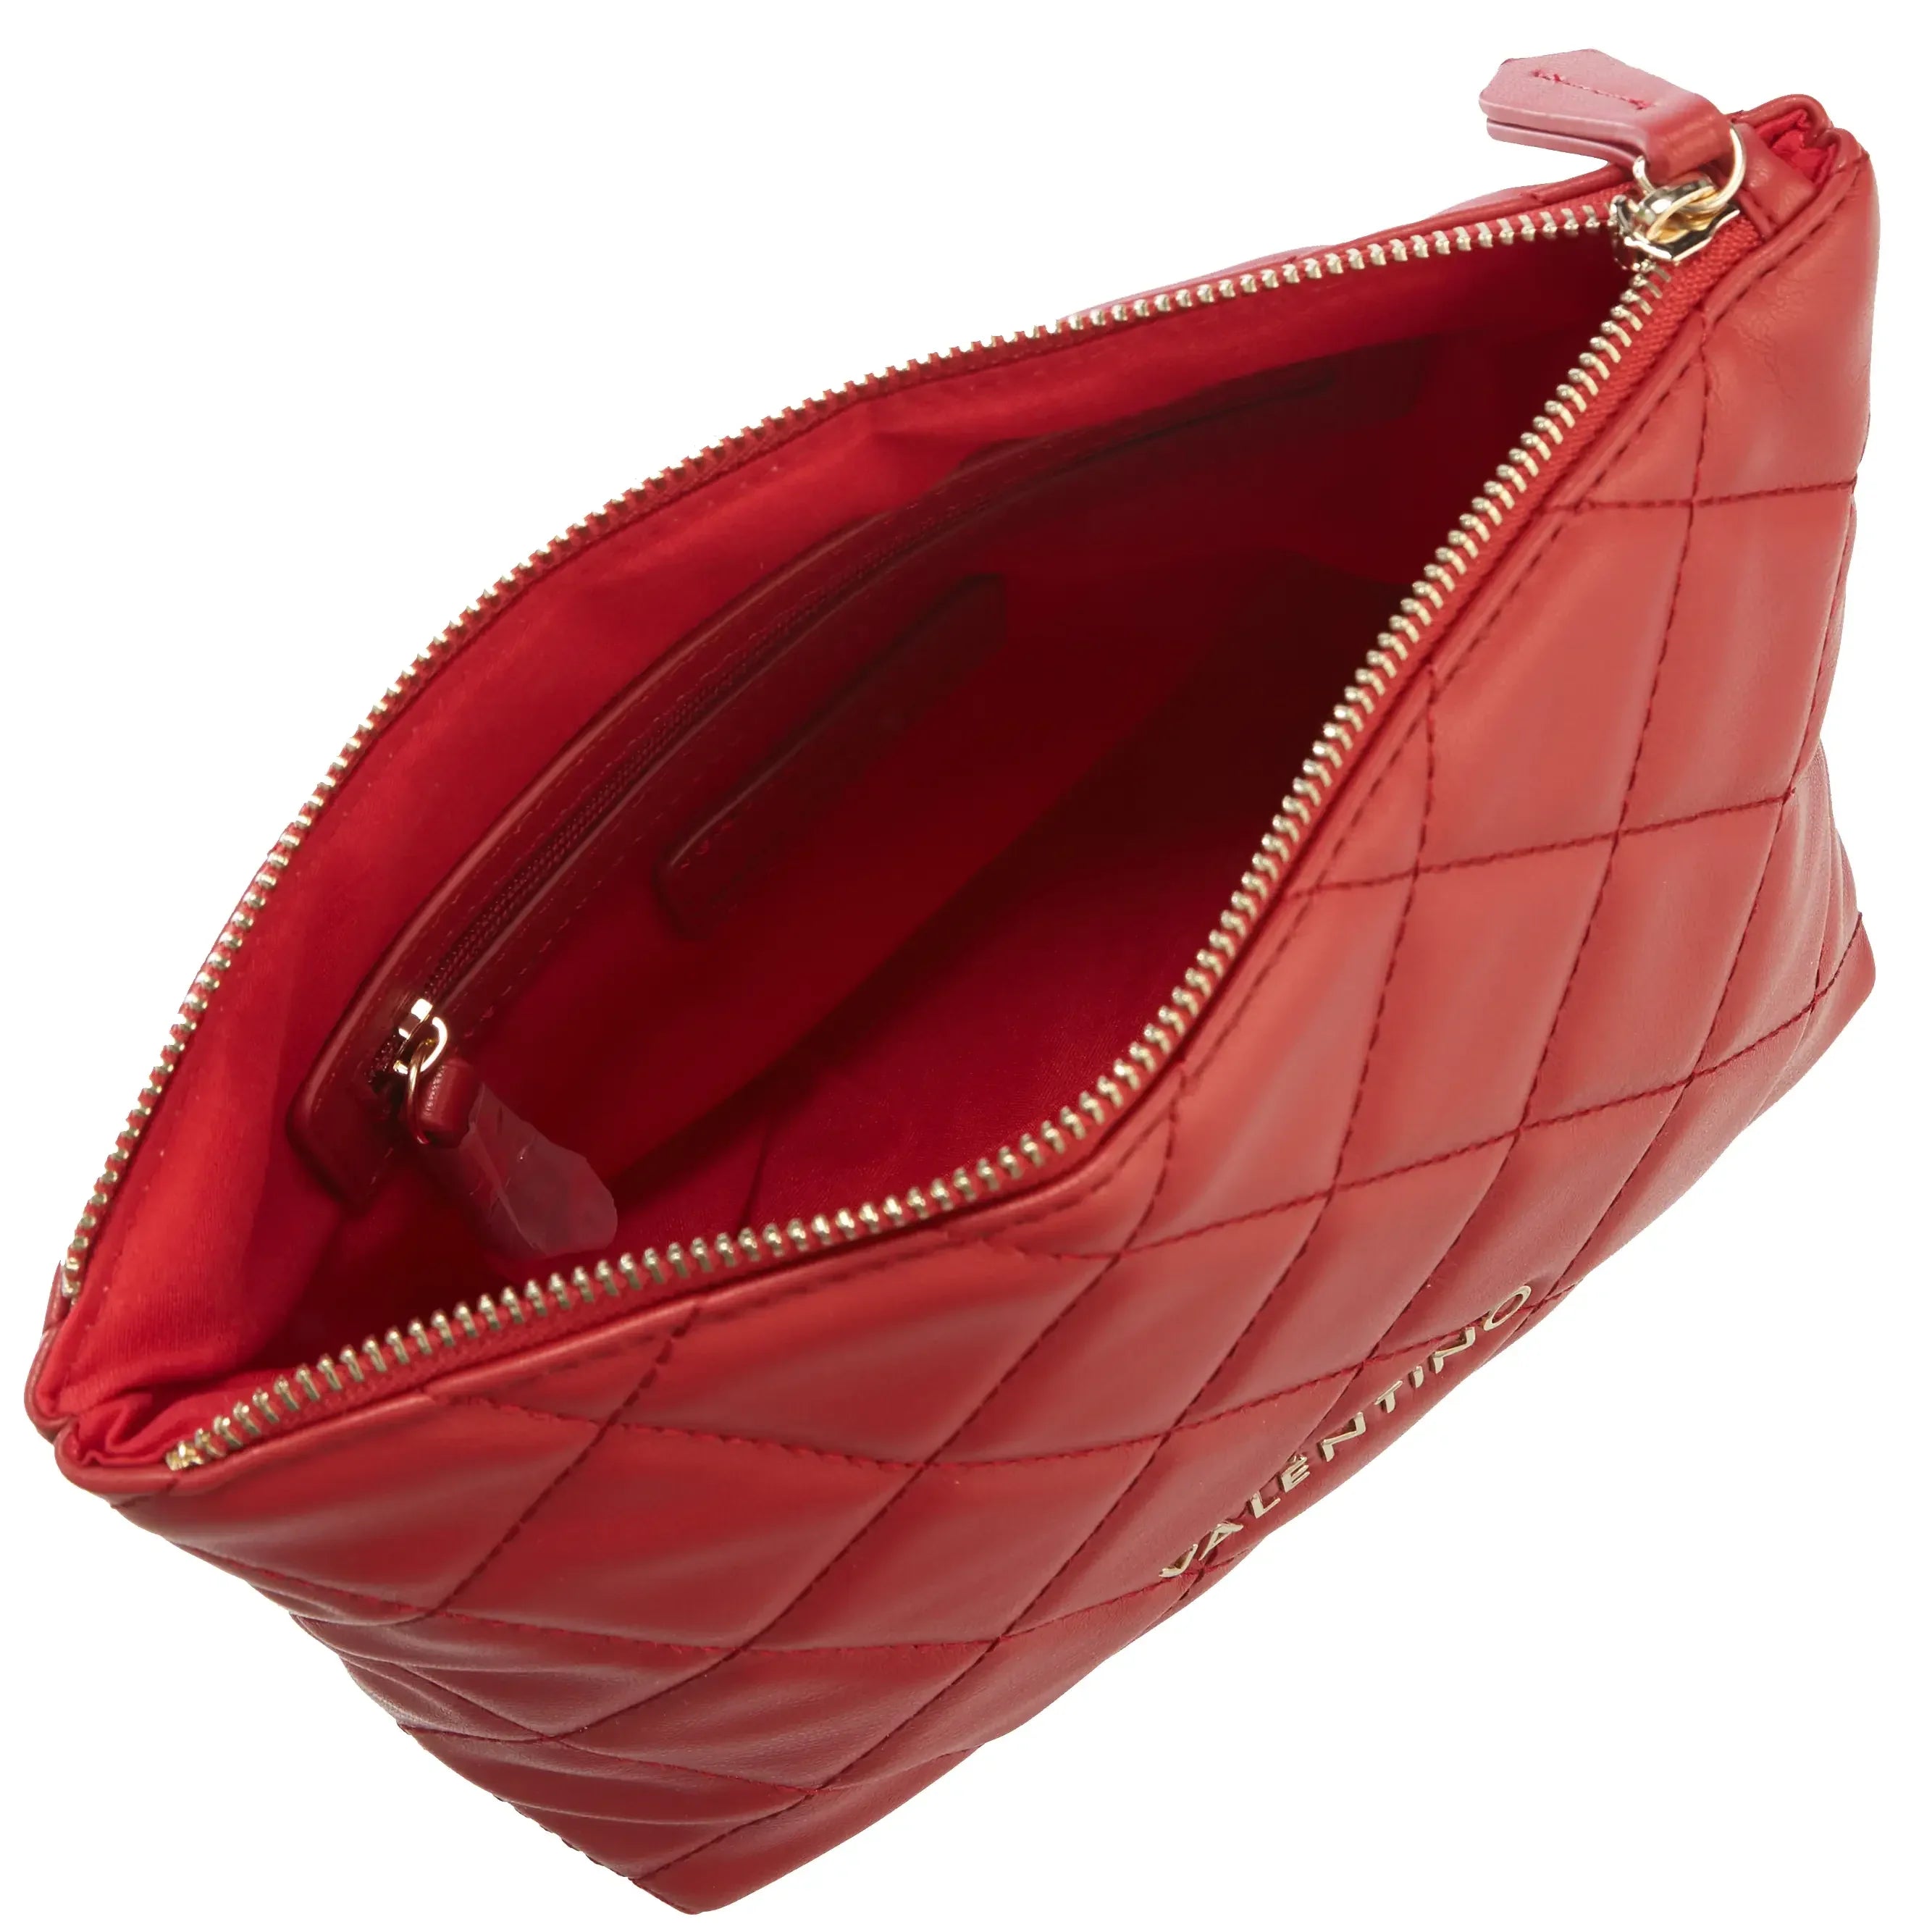 Valentino Bags Ocarina Kosmetiktasche 21 cm - Rosso